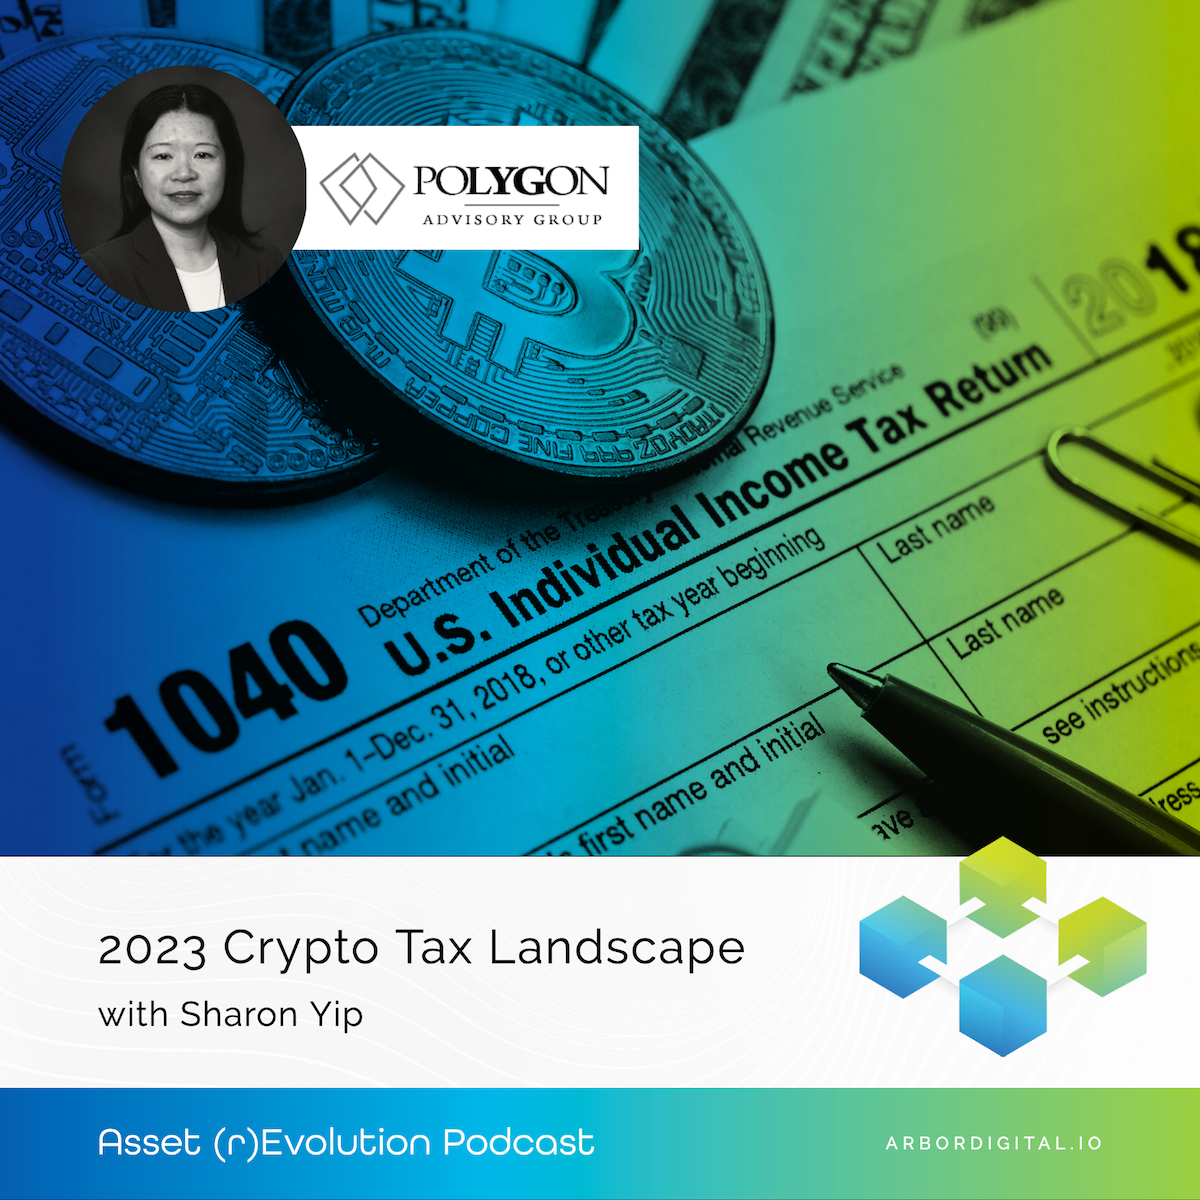 Polygon Advisory Group, Sharon Yip, and Arbor Digital, Marc Nichols, announce partnerships and discuss crypto tax pitfalls & IRS technology